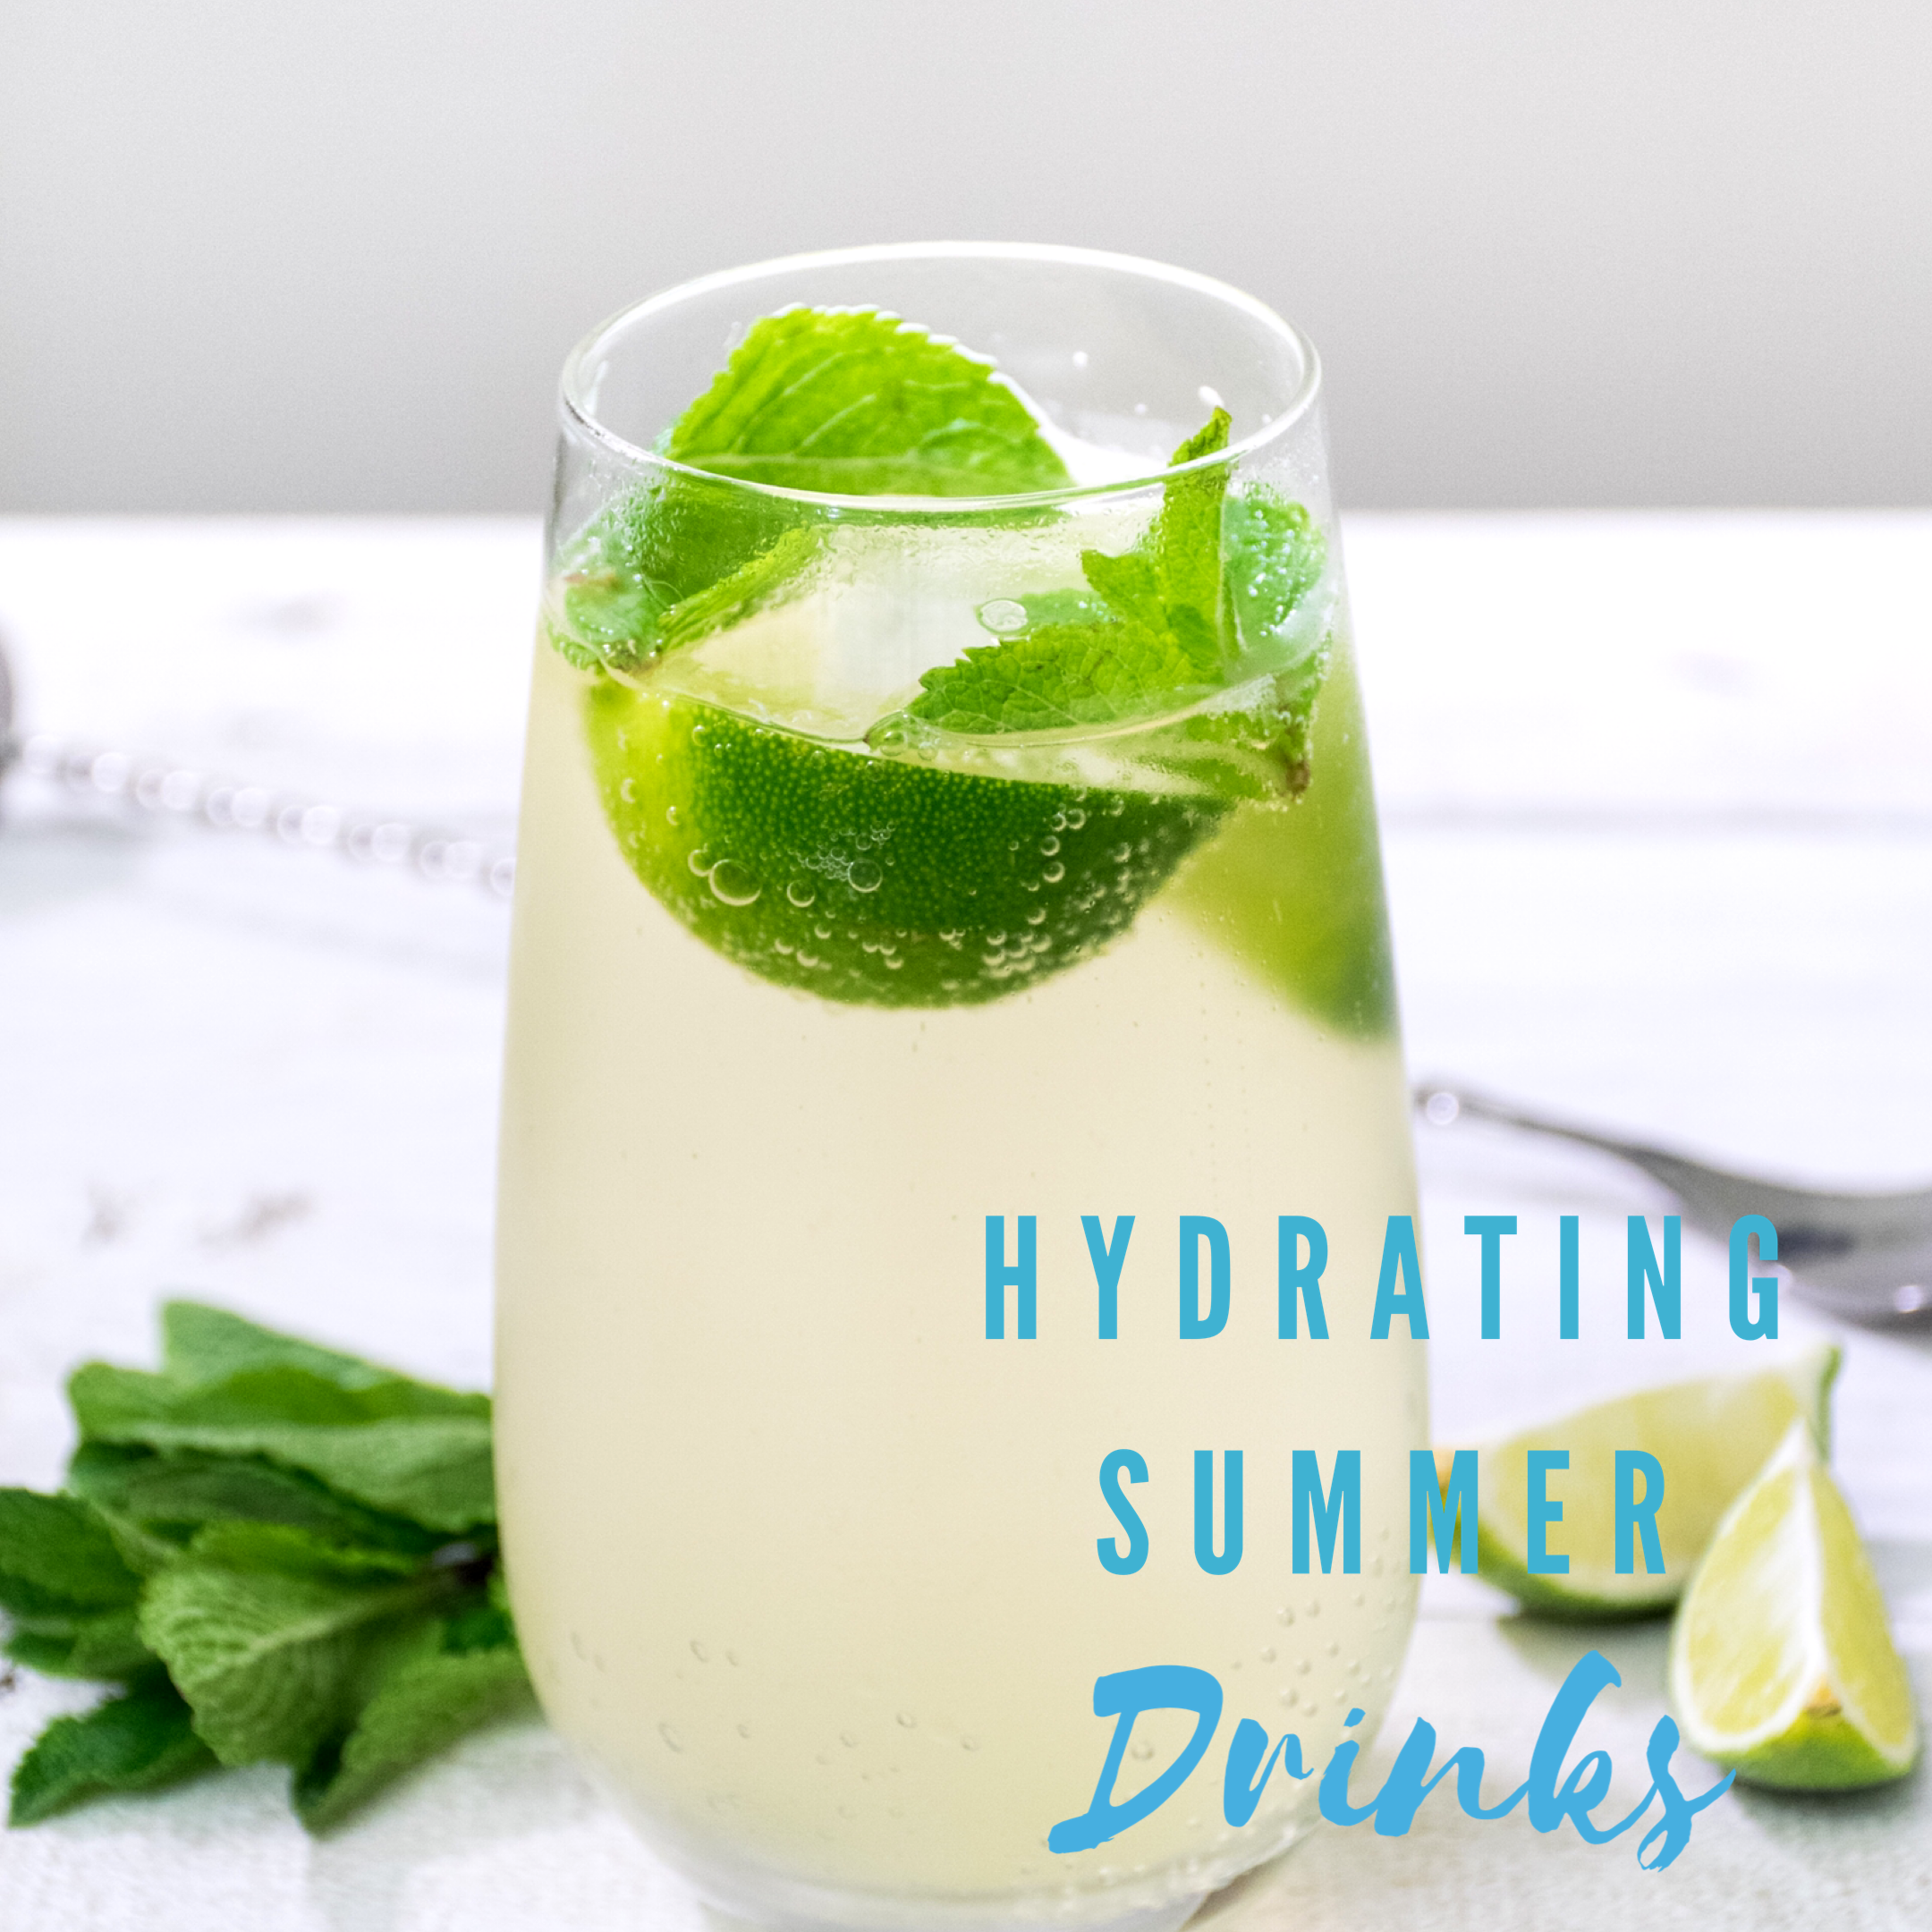 Hydrating Summer Drinks